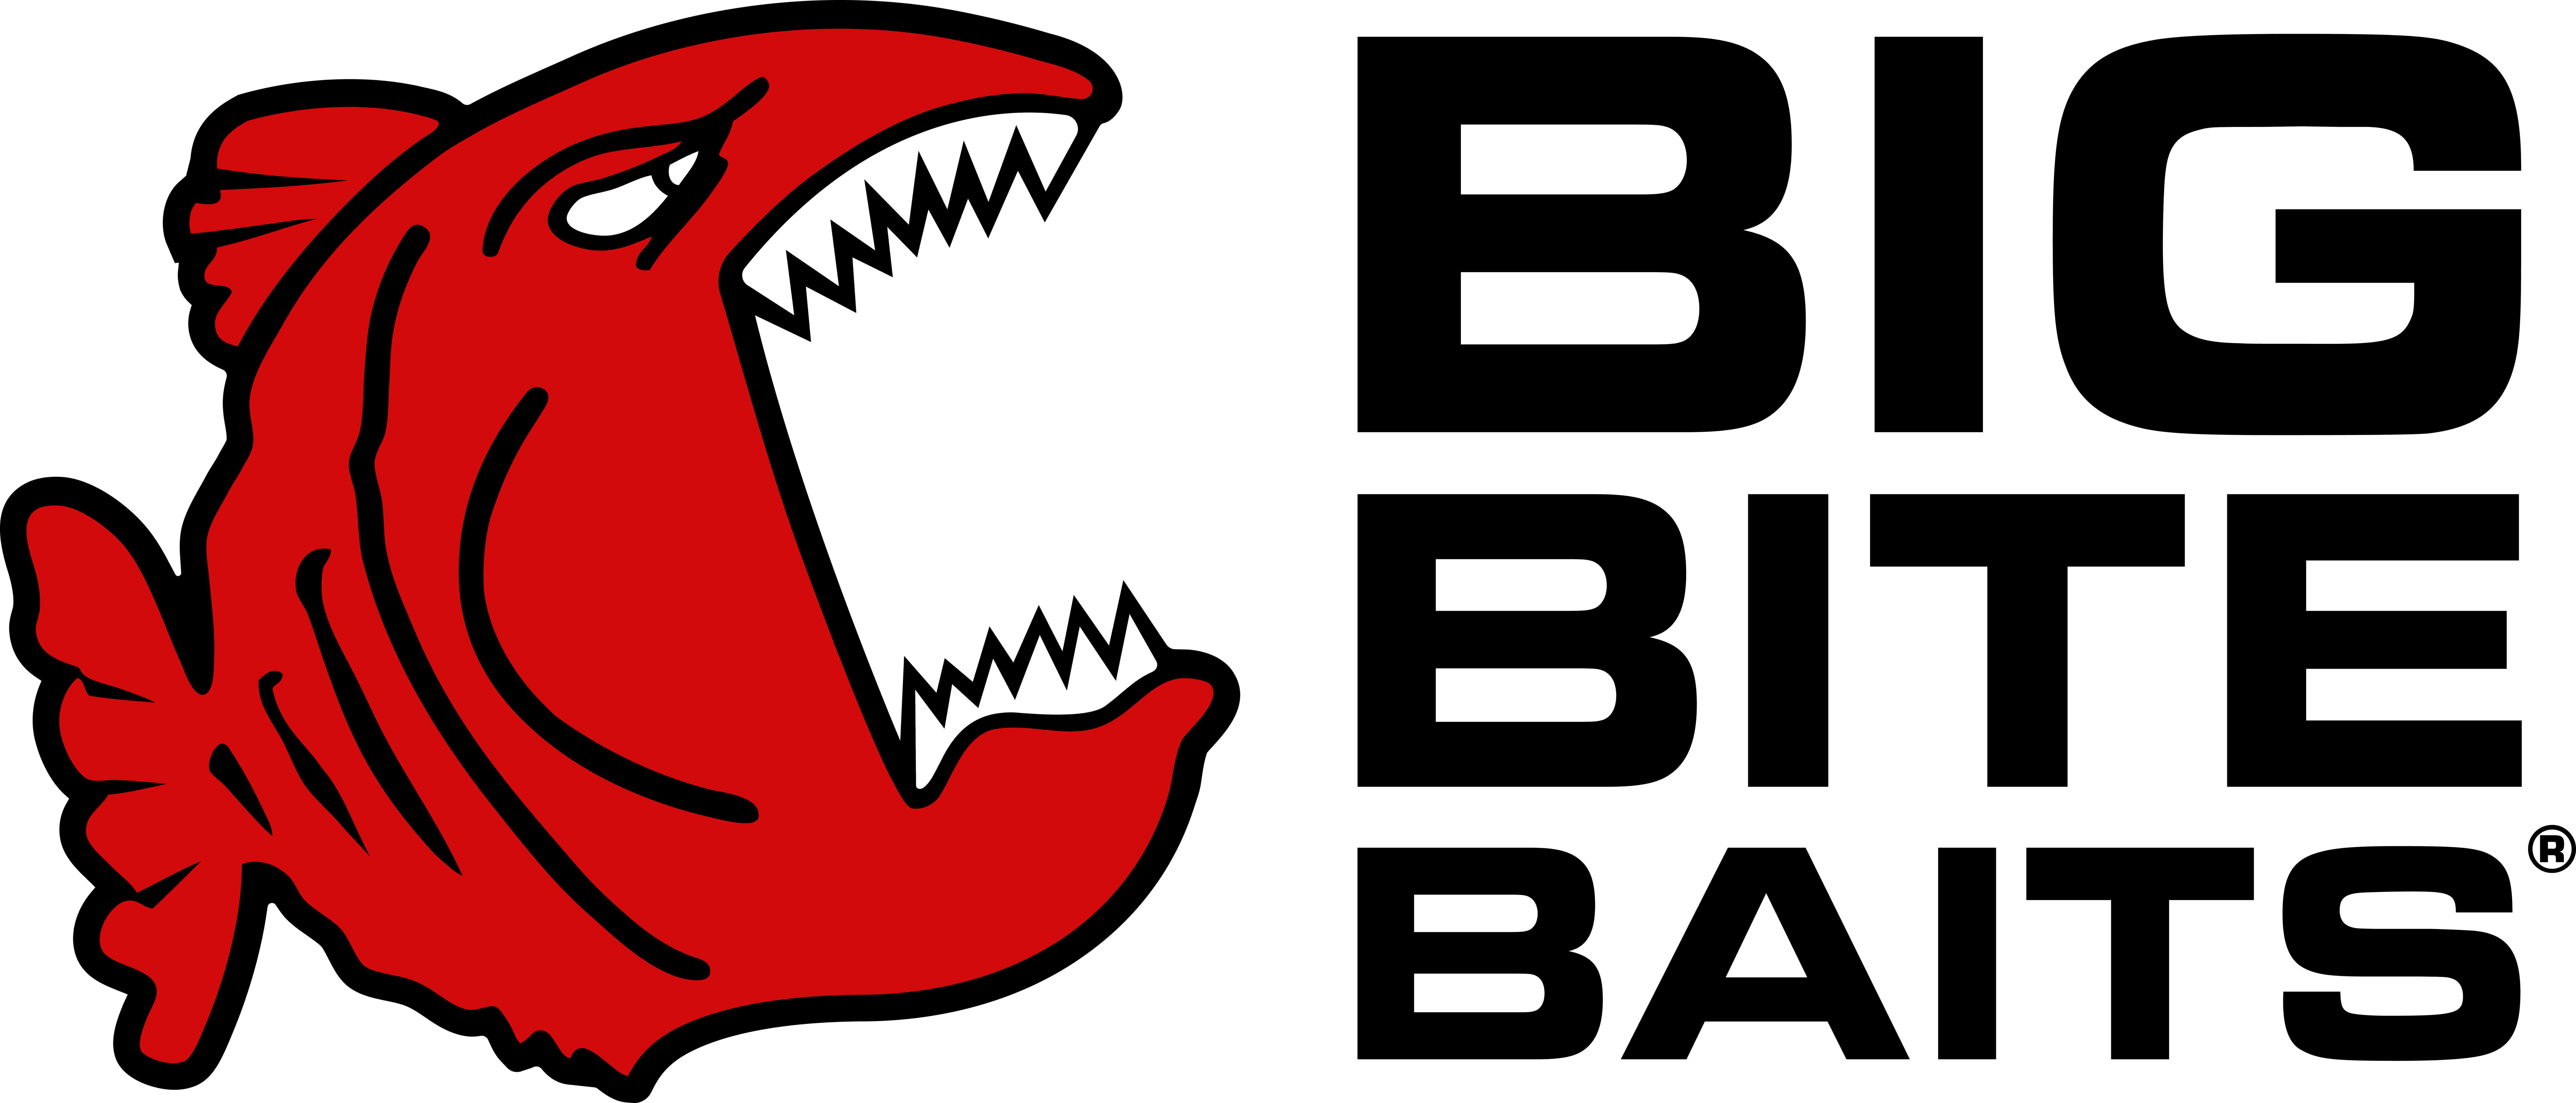 bbb logo 1 black - Big Bite Baits